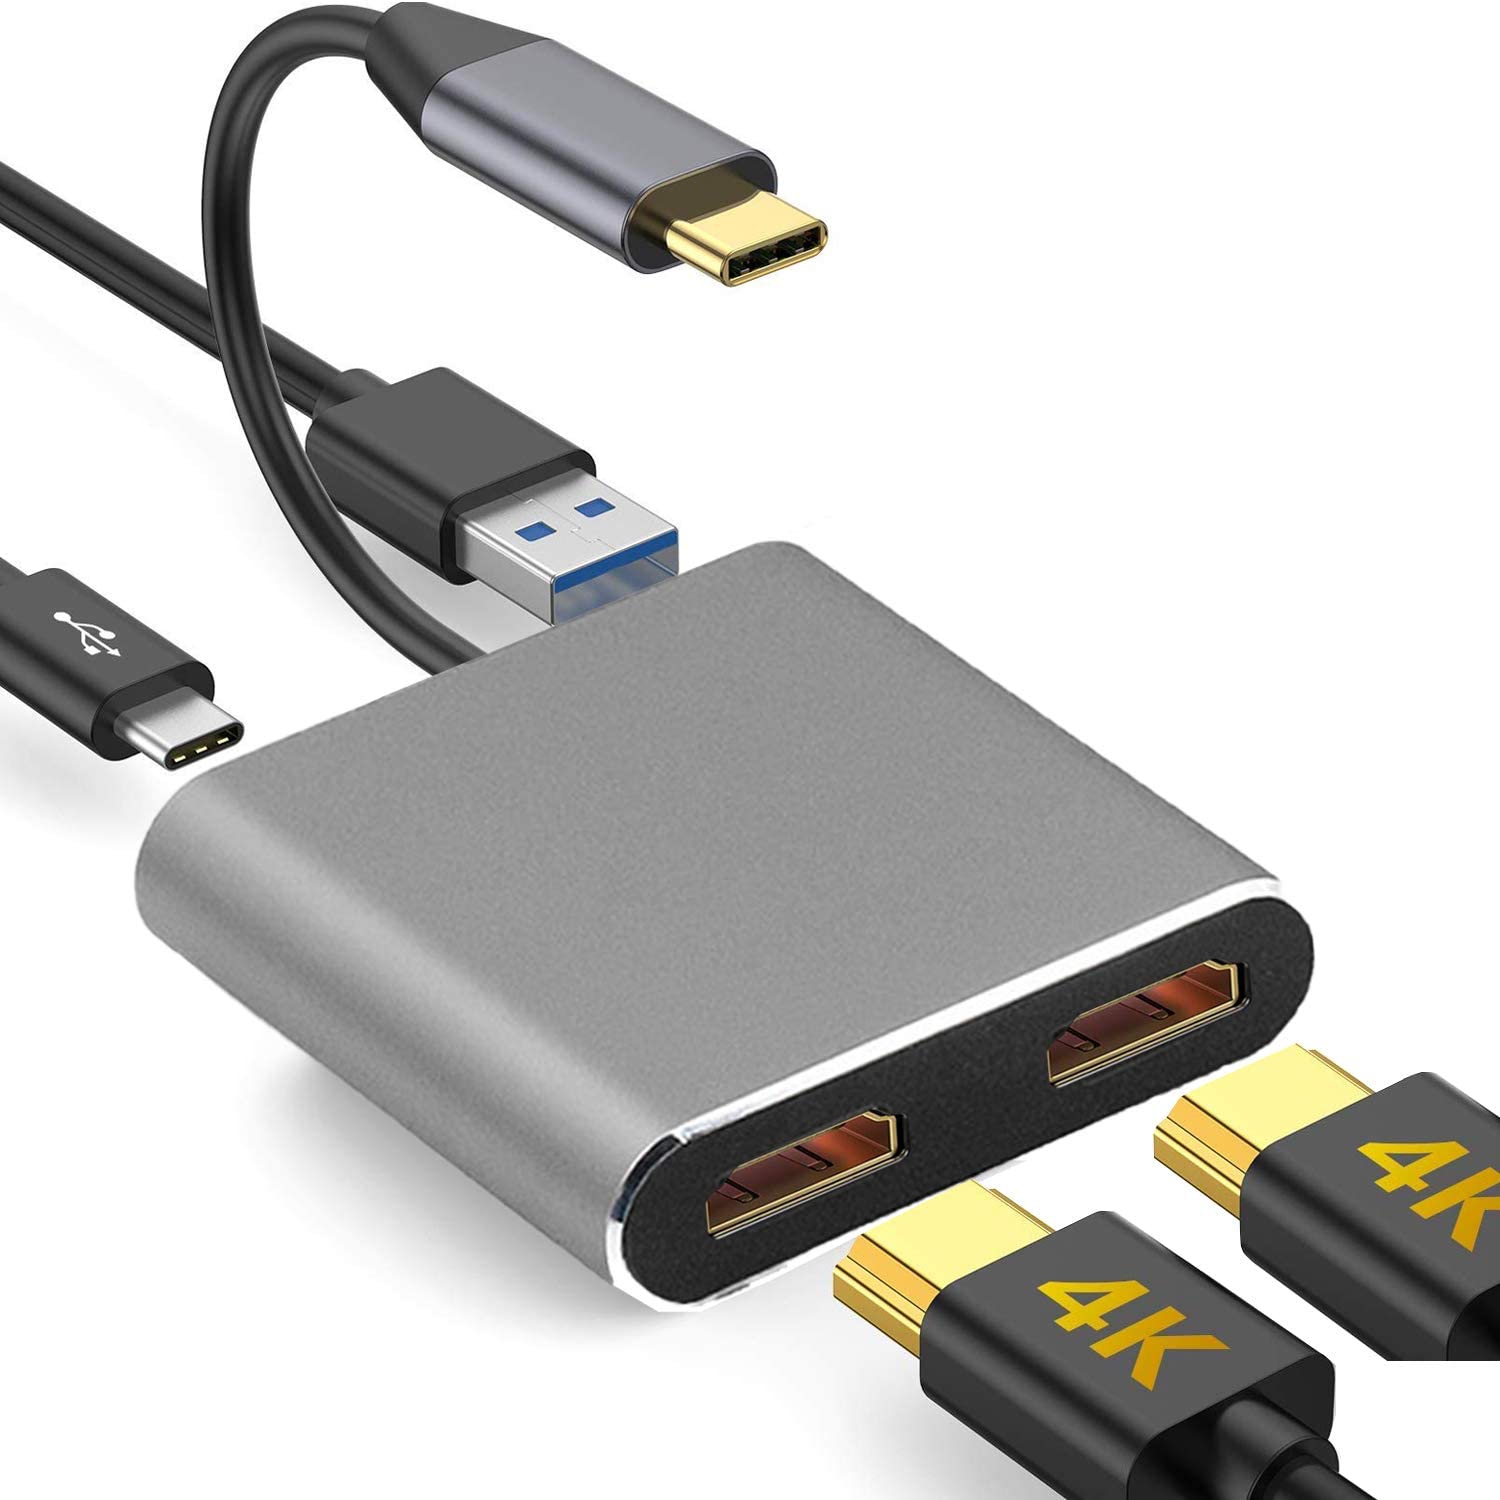 HYFAI USB C to Dual HDMI Adapter USB Type C to 2 HDMI 4K USB 3.0 Hub Converter Compatible MacBook Pro/iPad Pro 2018/Samsung Galaxy S8-S20/Google Pixelbook